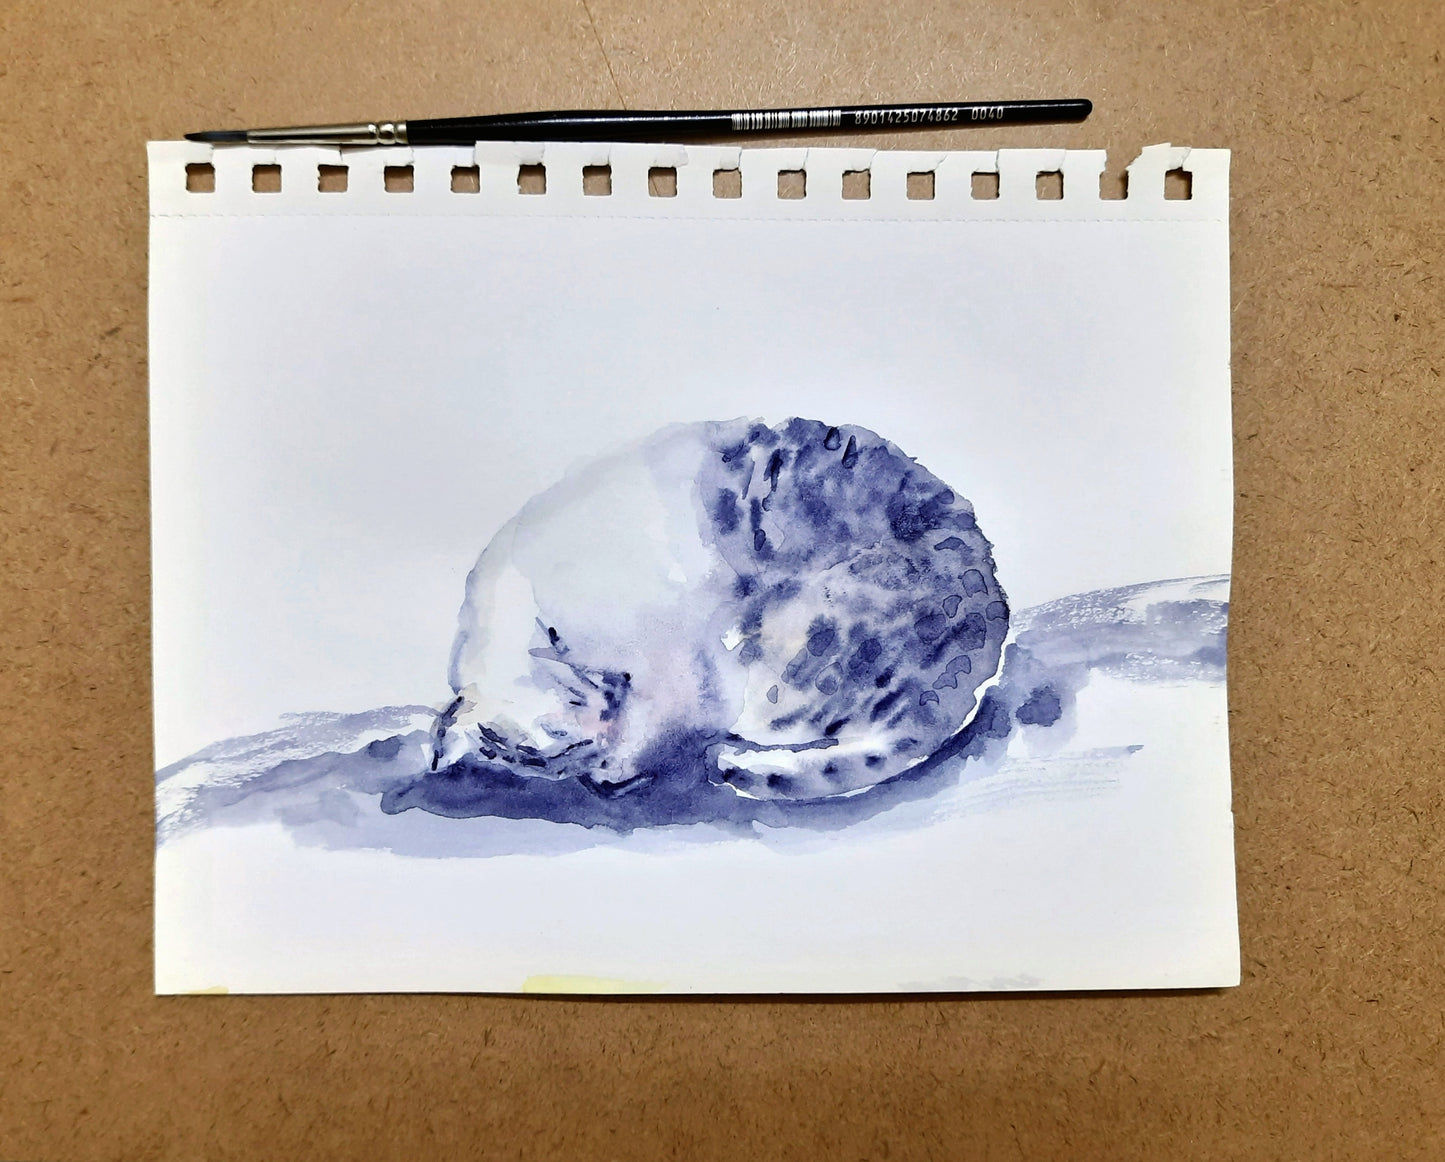 Sleeping cat watercolor painting studio view